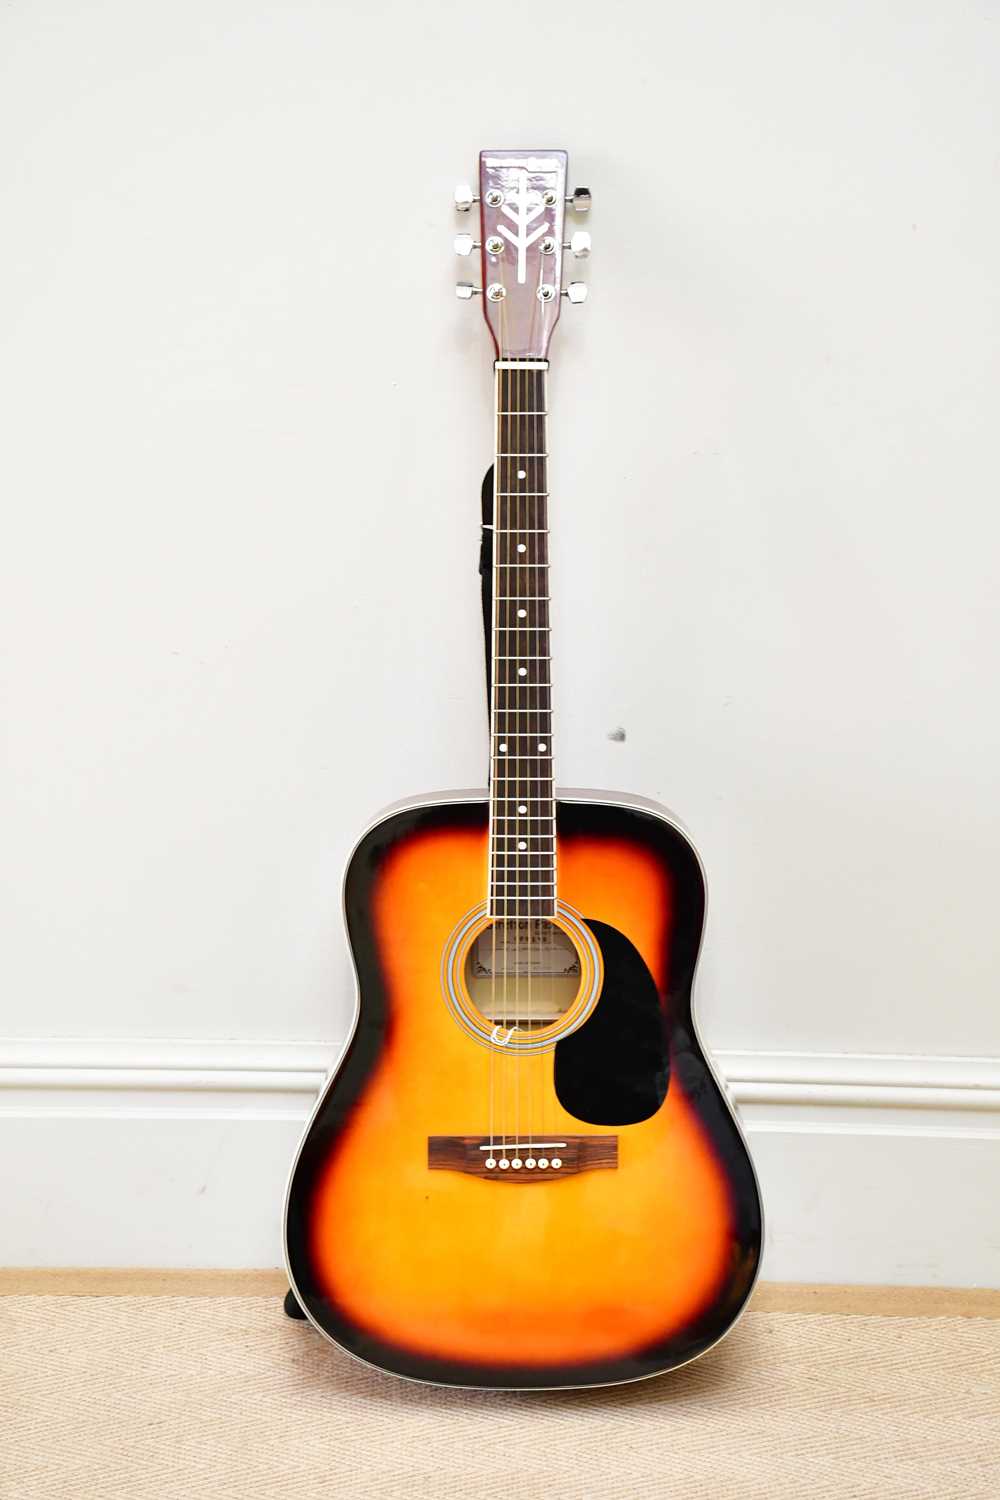 STRETTON PAYNE; an acoustic guitar, model SPD15B.